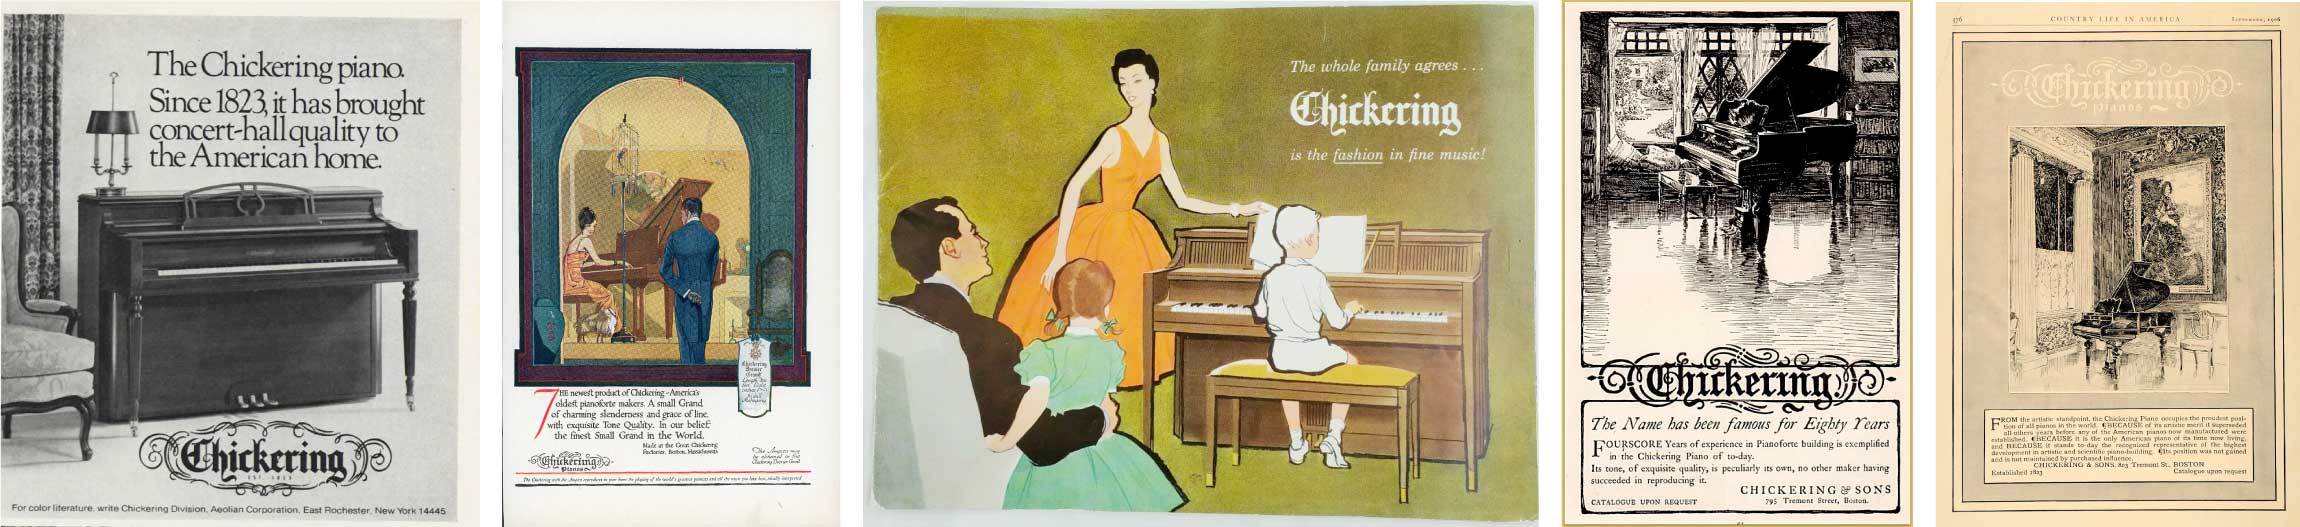 Chickering-vintage